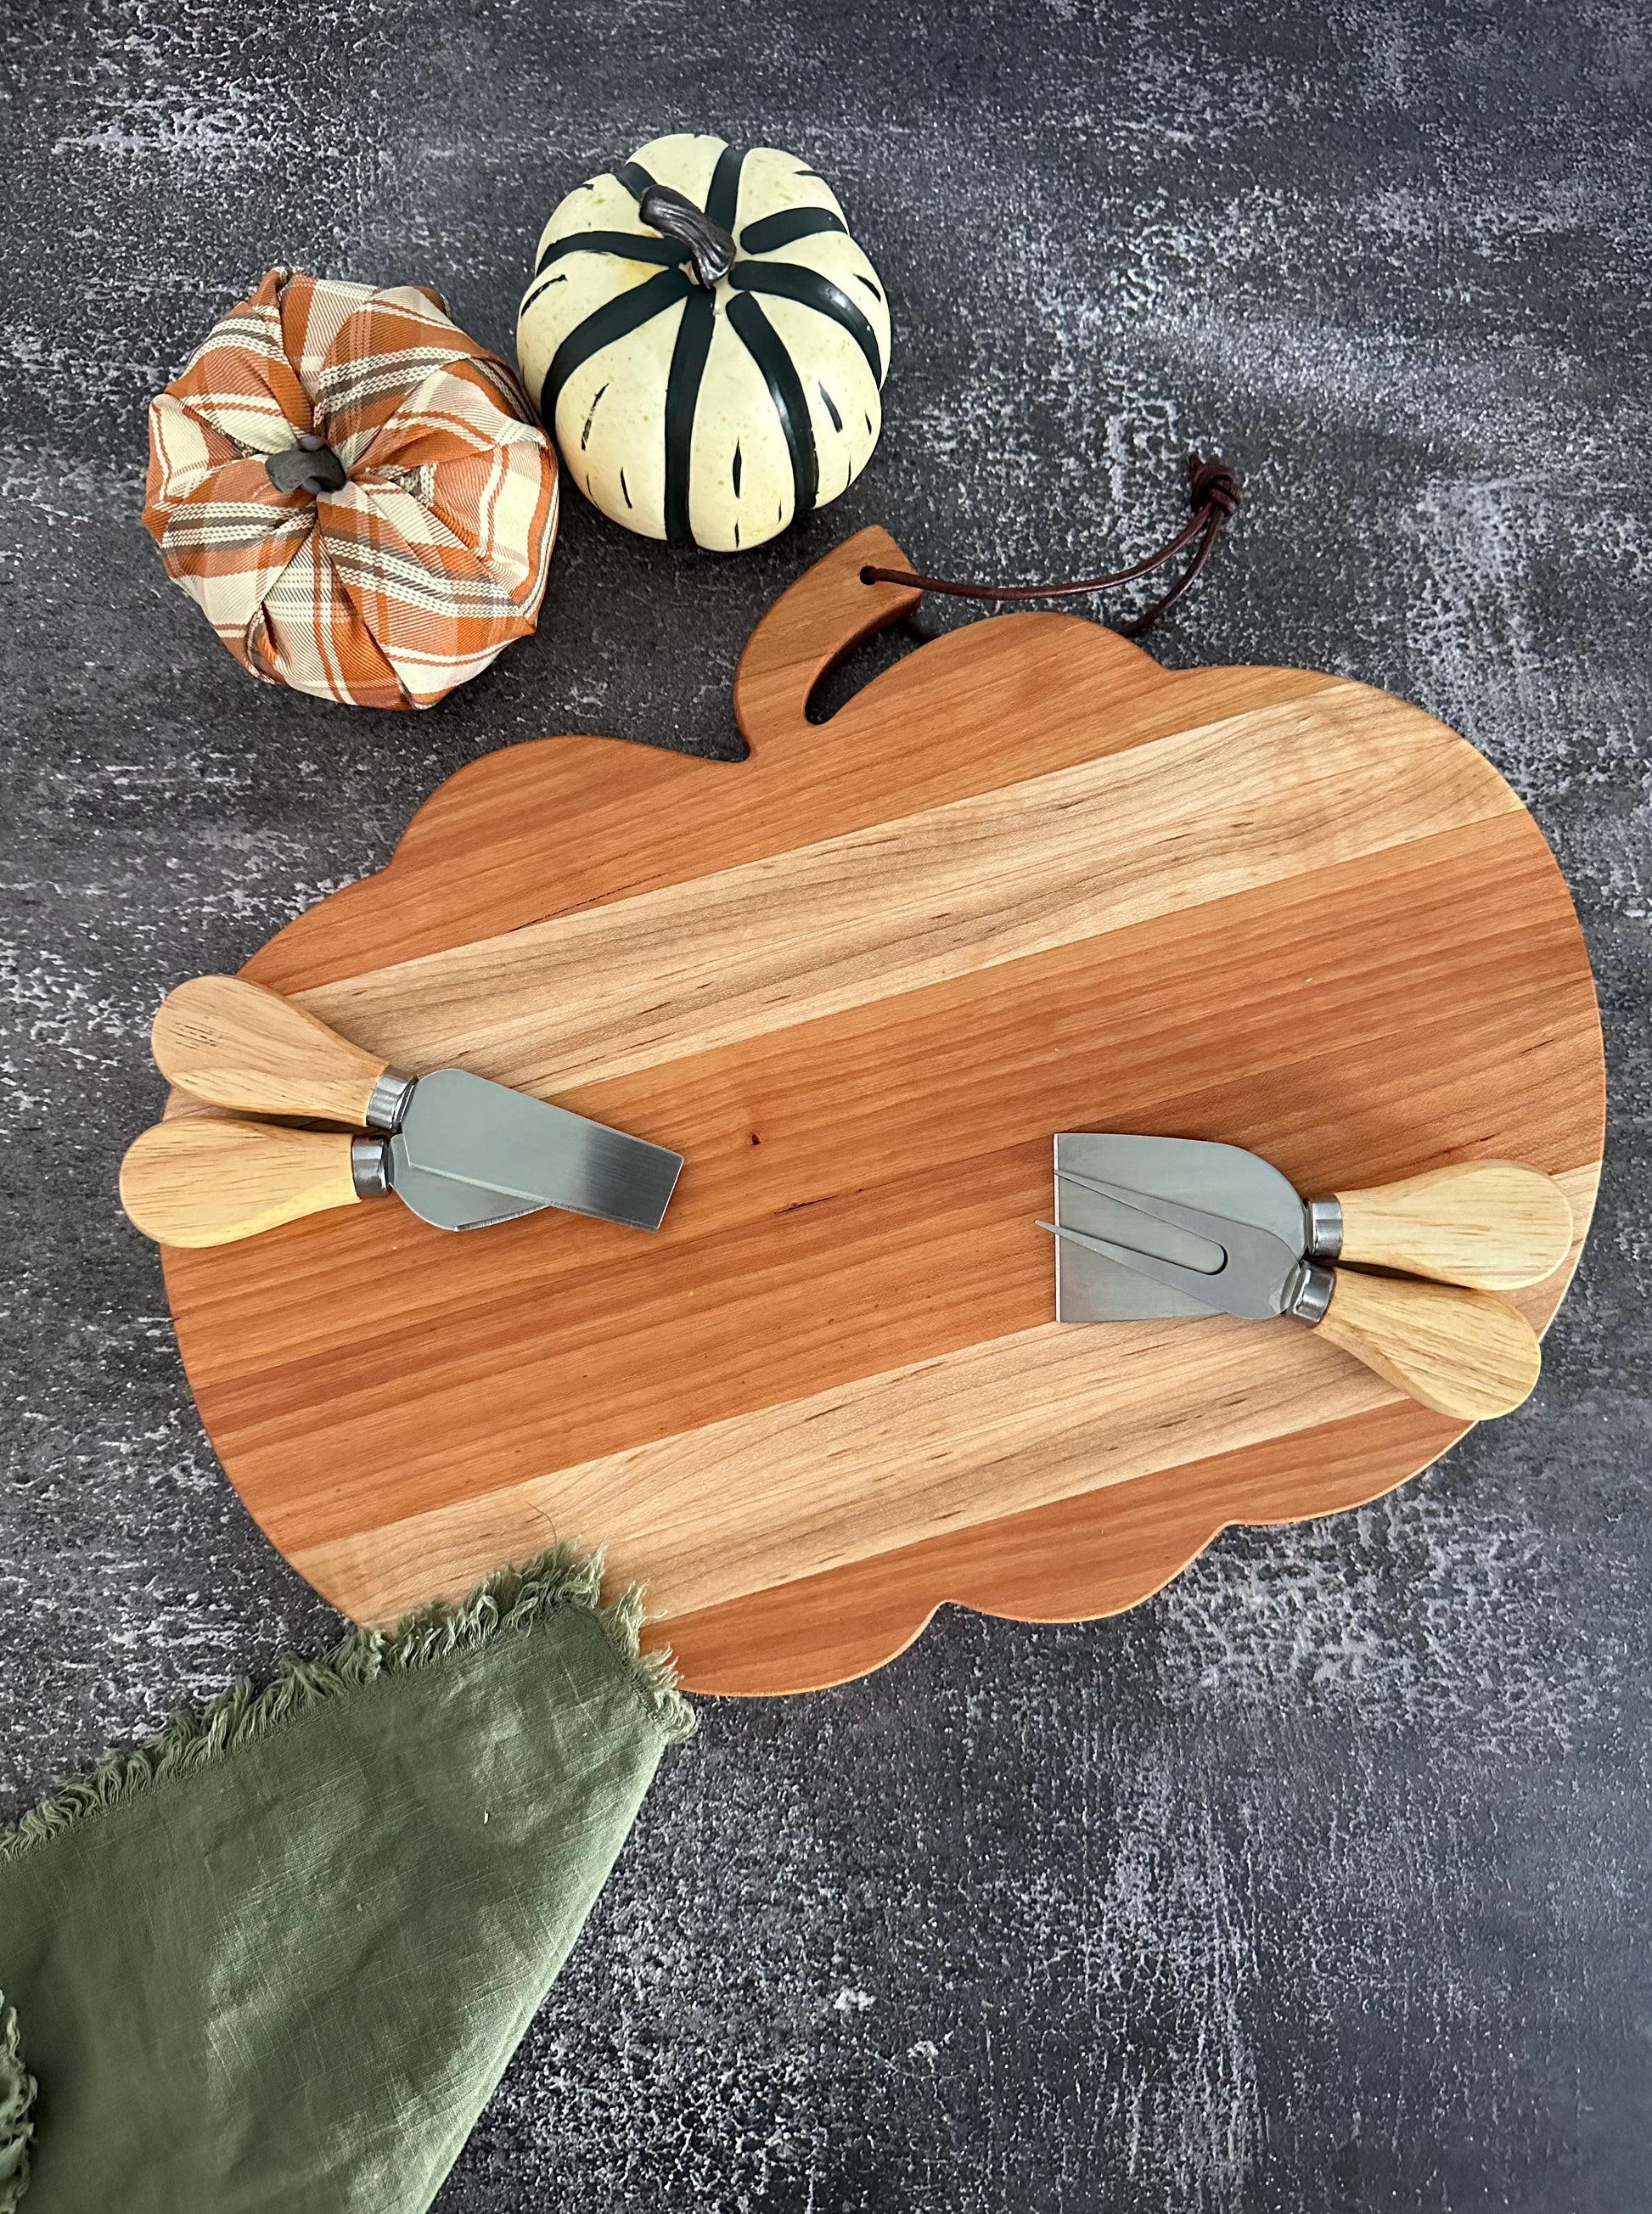 pumpkin shaped serving tray